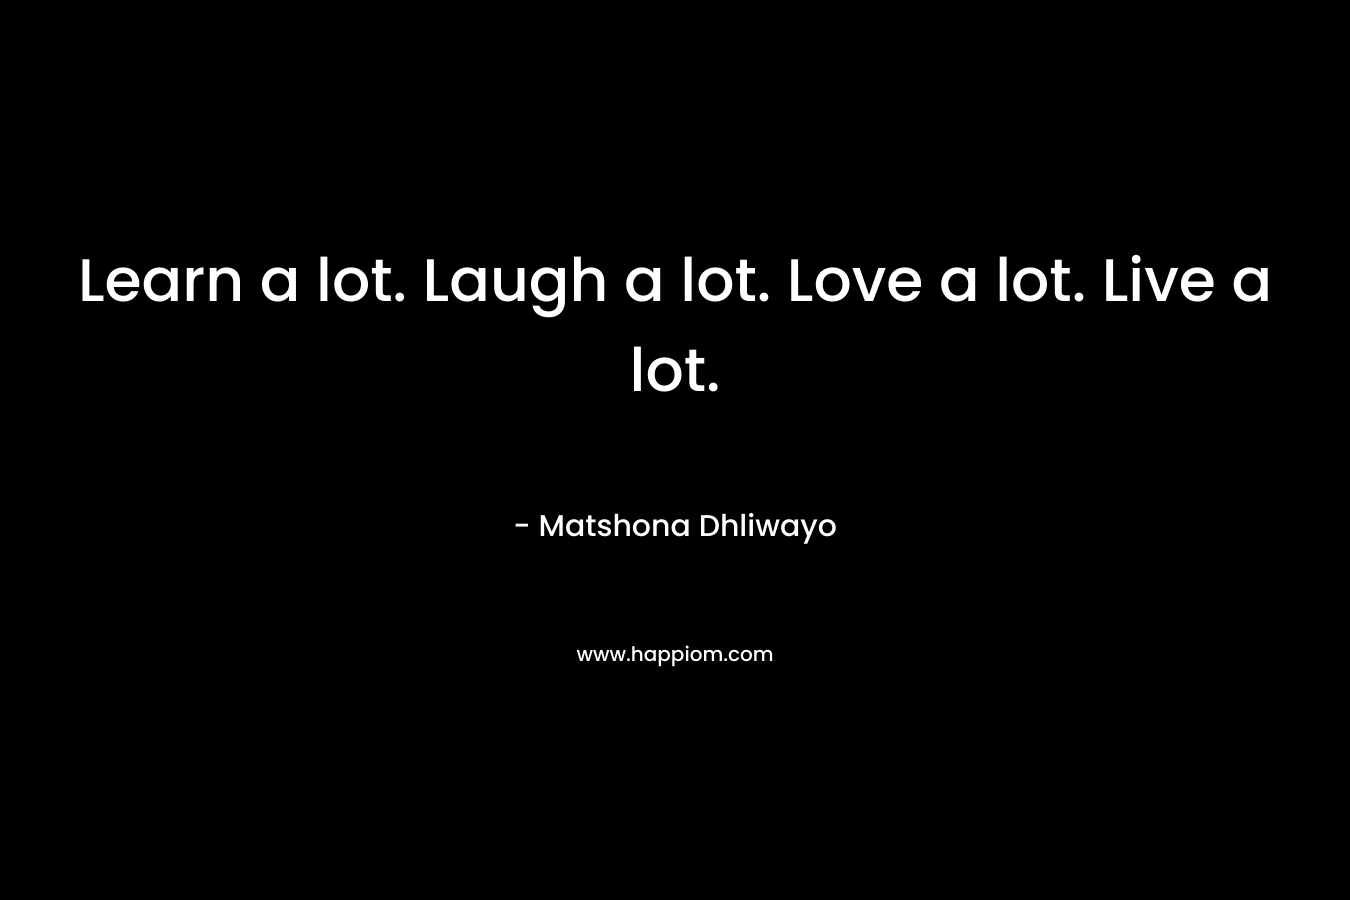 Learn a lot. Laugh a lot. Love a lot. Live a lot.